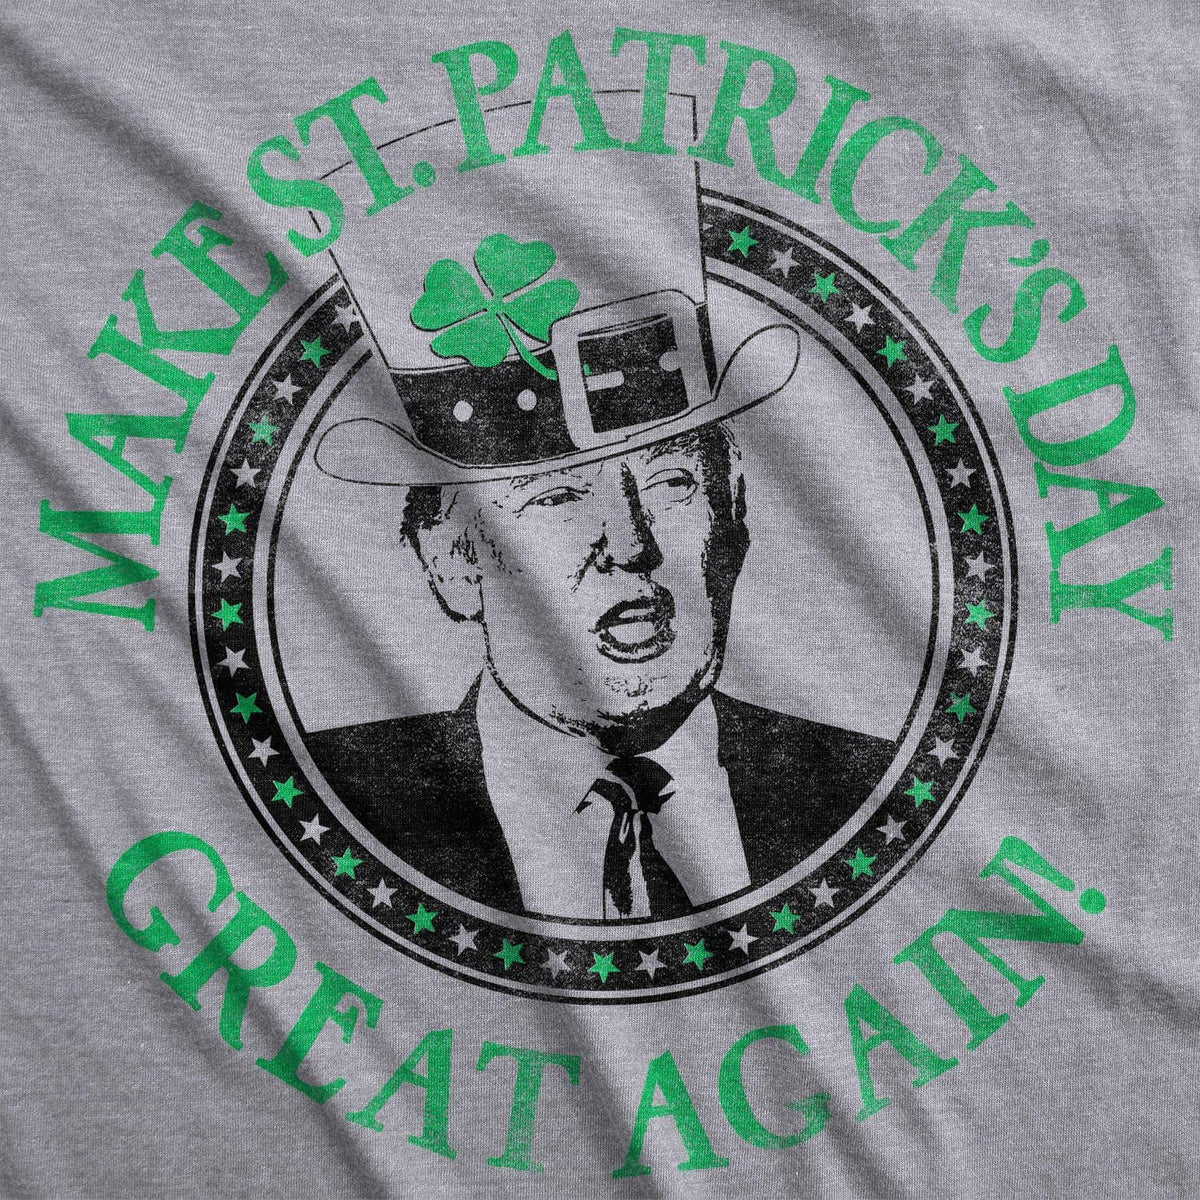 Make St. Patrick’s Day Great Again Women&#39;s Tshirt  -  Crazy Dog T-Shirts